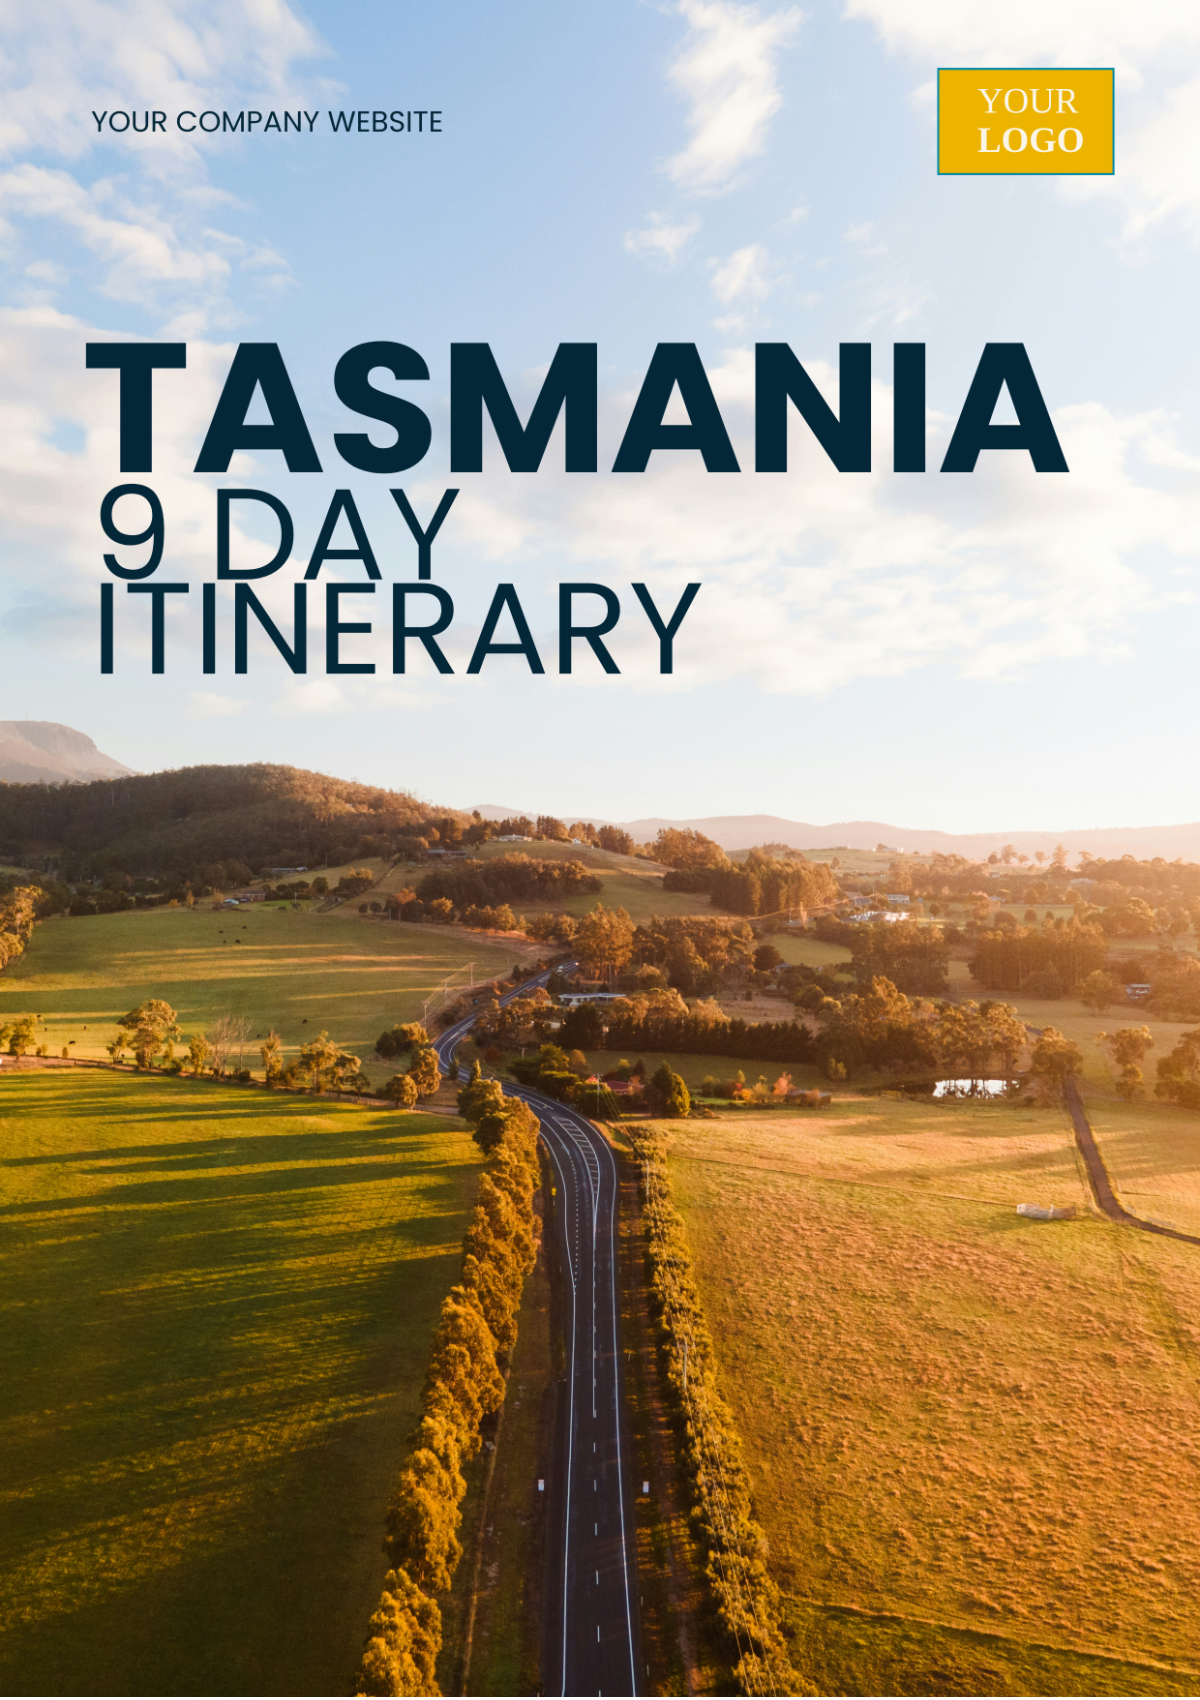 Free 9 Day Tasmania Itinerary Template